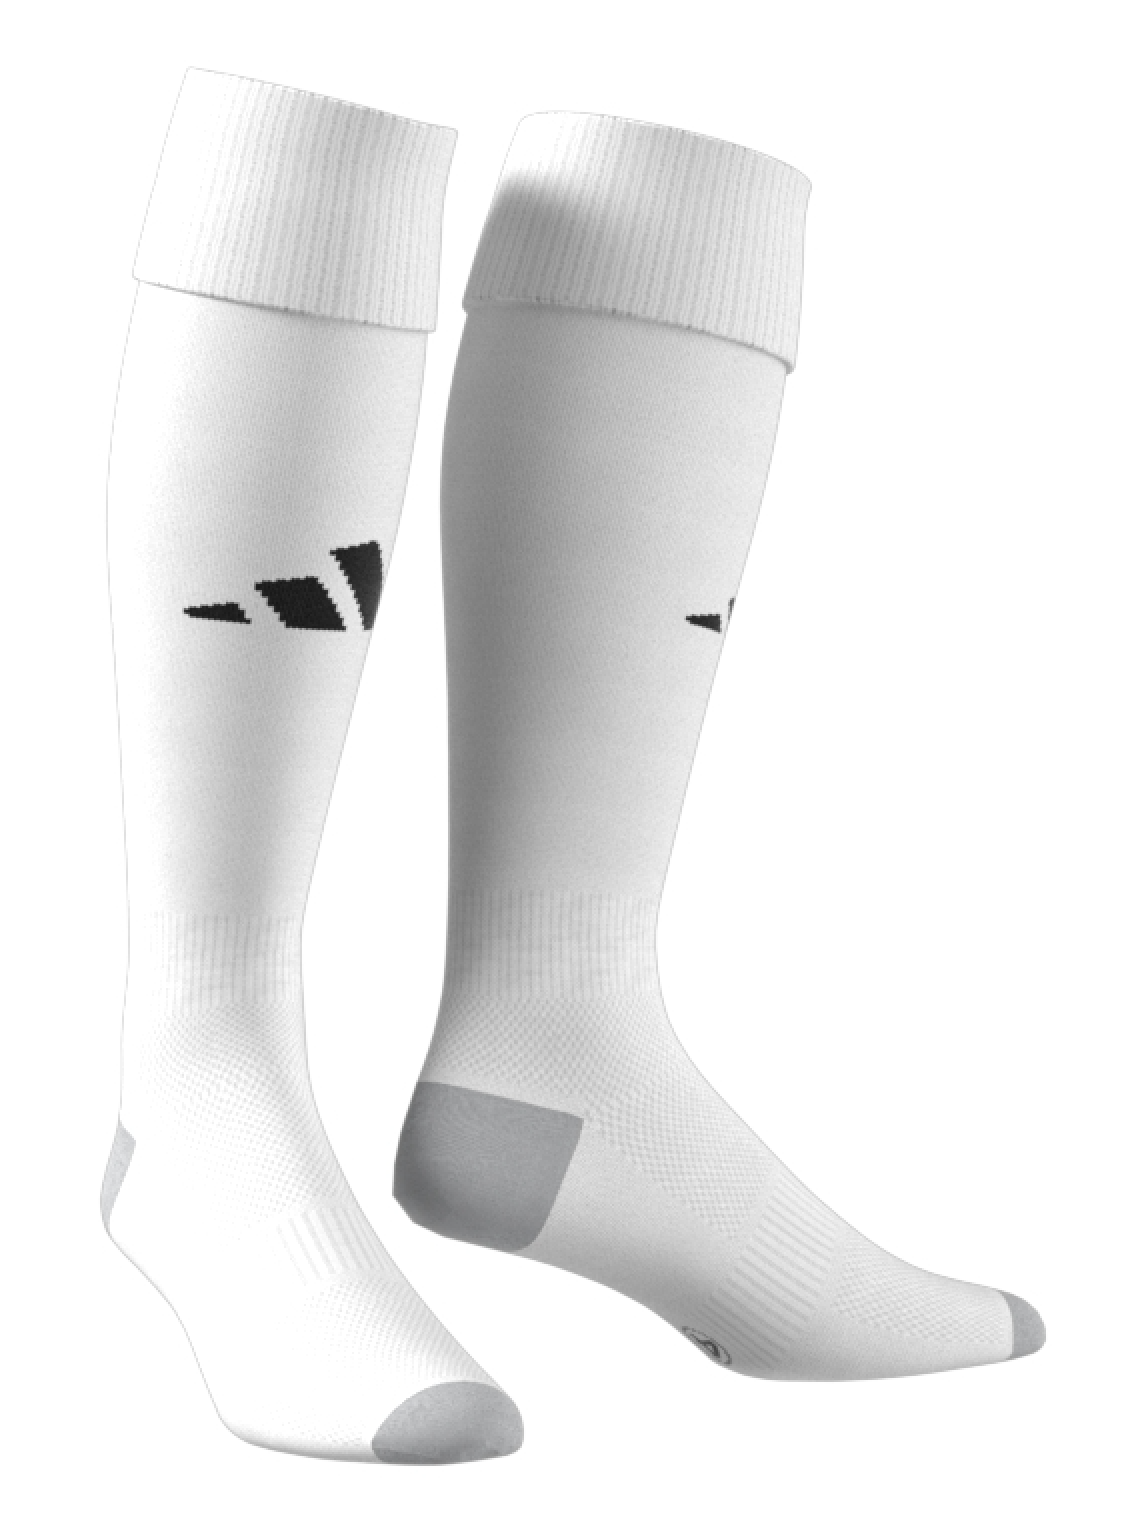 Adidas Milano 23 Sock - White / Black - Total Football Direct